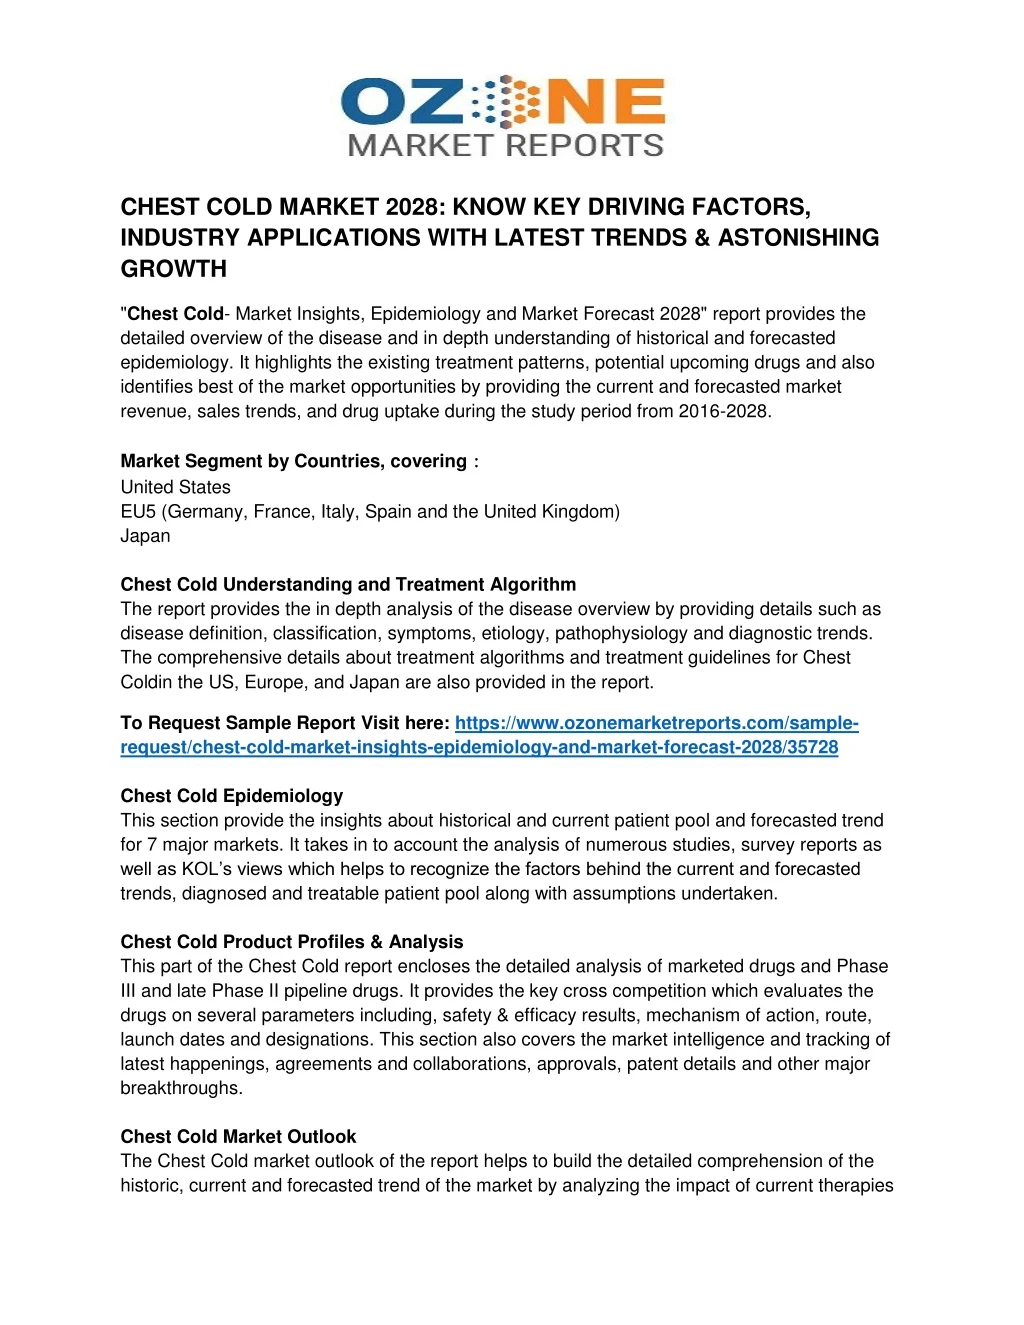 chest cold market 2028 know key driving factors